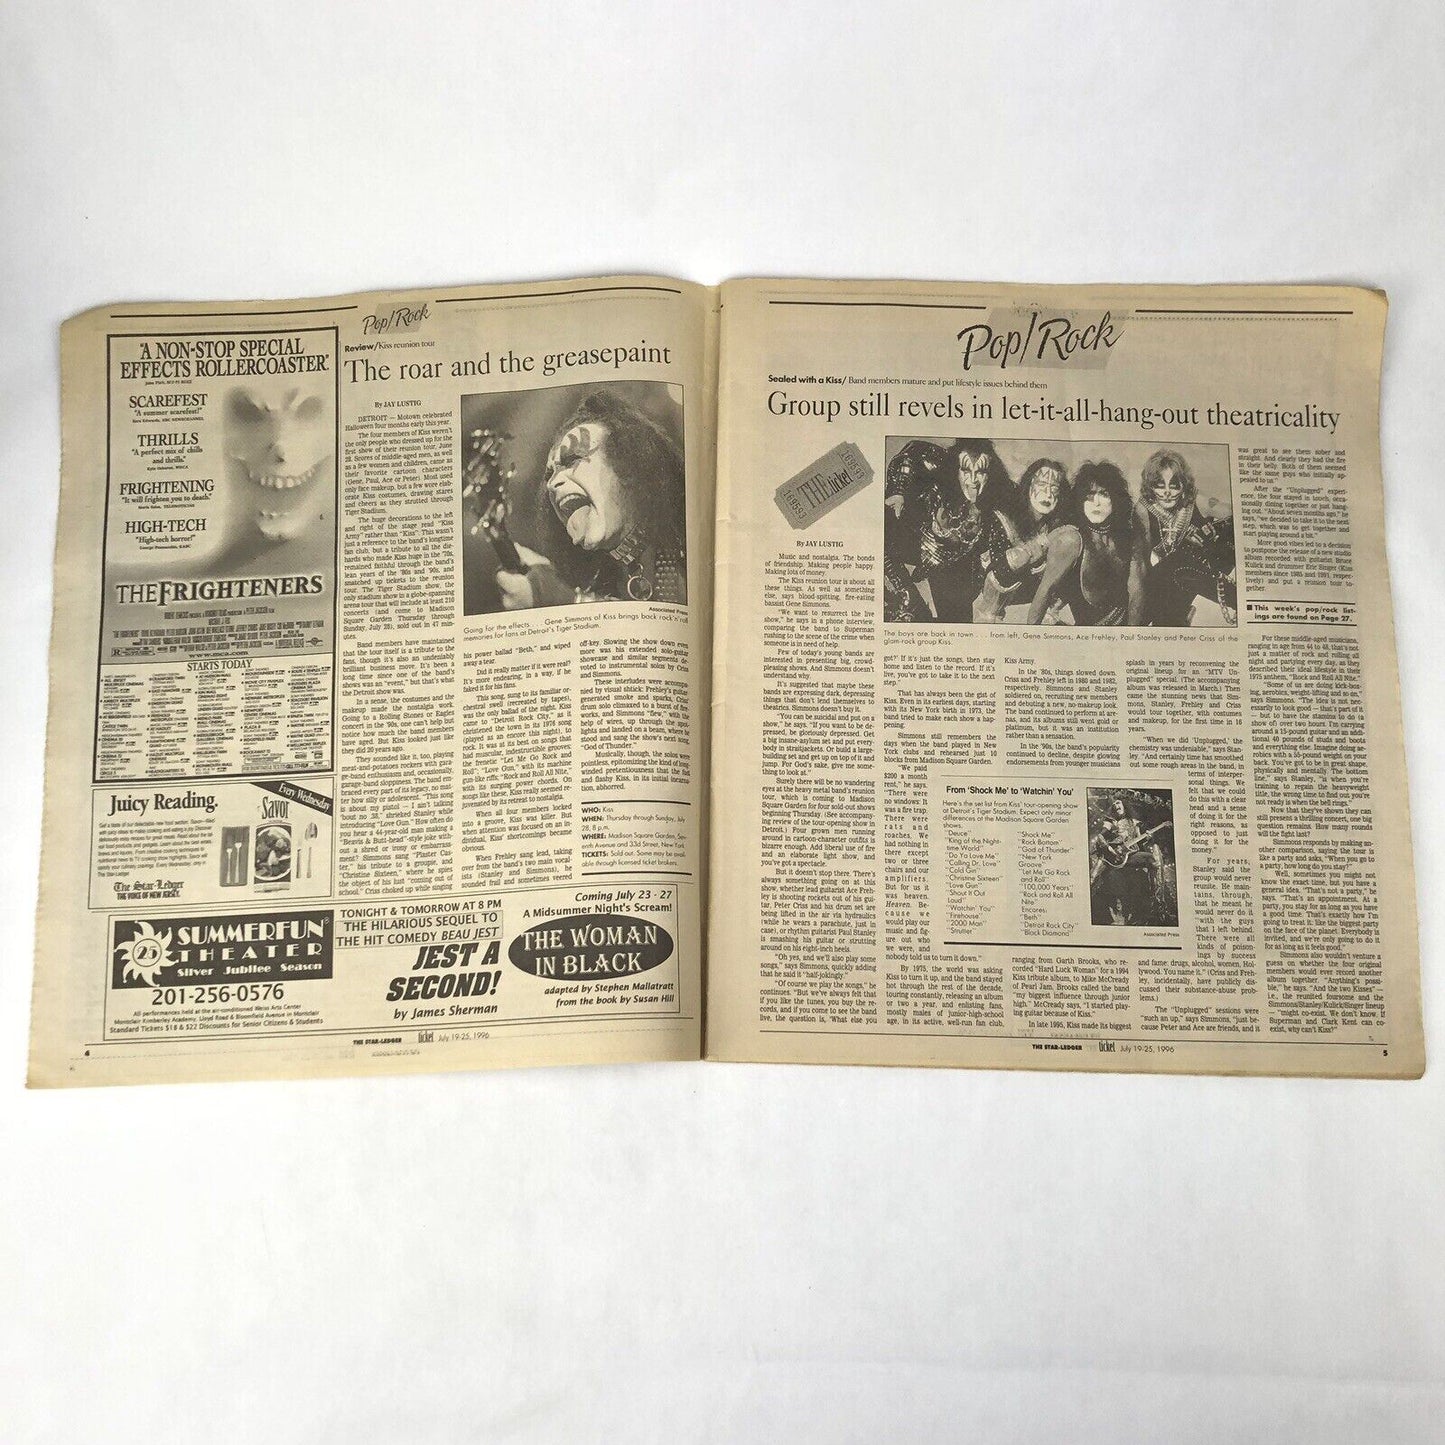 KISS 1996 COVER & ARTICLE Newspaper Oversize  Magazine THE TICKET Star Ledger NJ